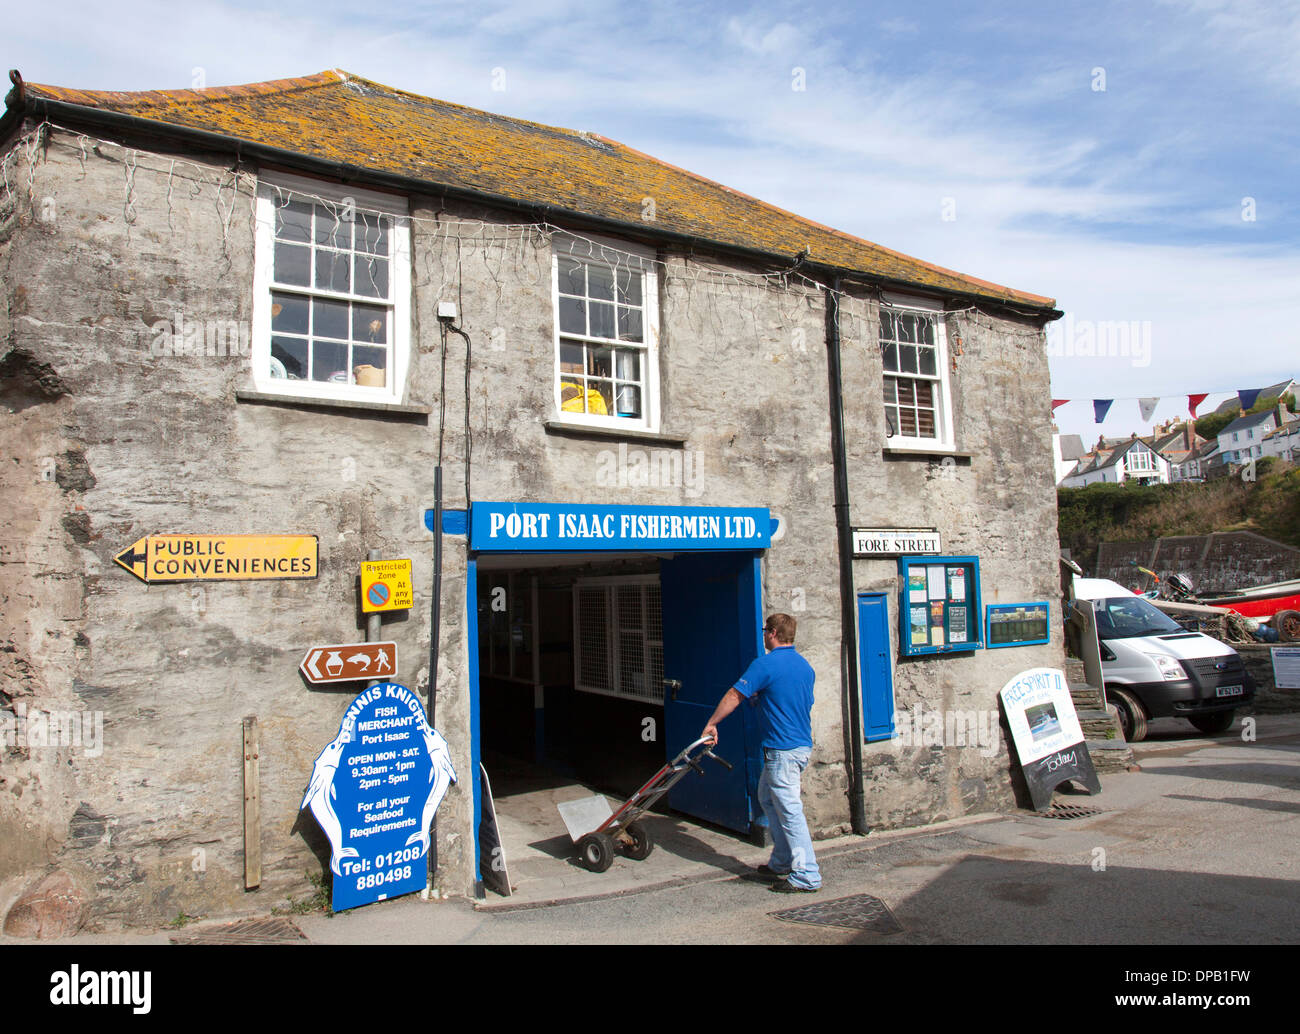 Port Isaac pescatori Ltd. I mercanti di pesce in Port Isaac, Cornwall, Regno Unito Foto Stock